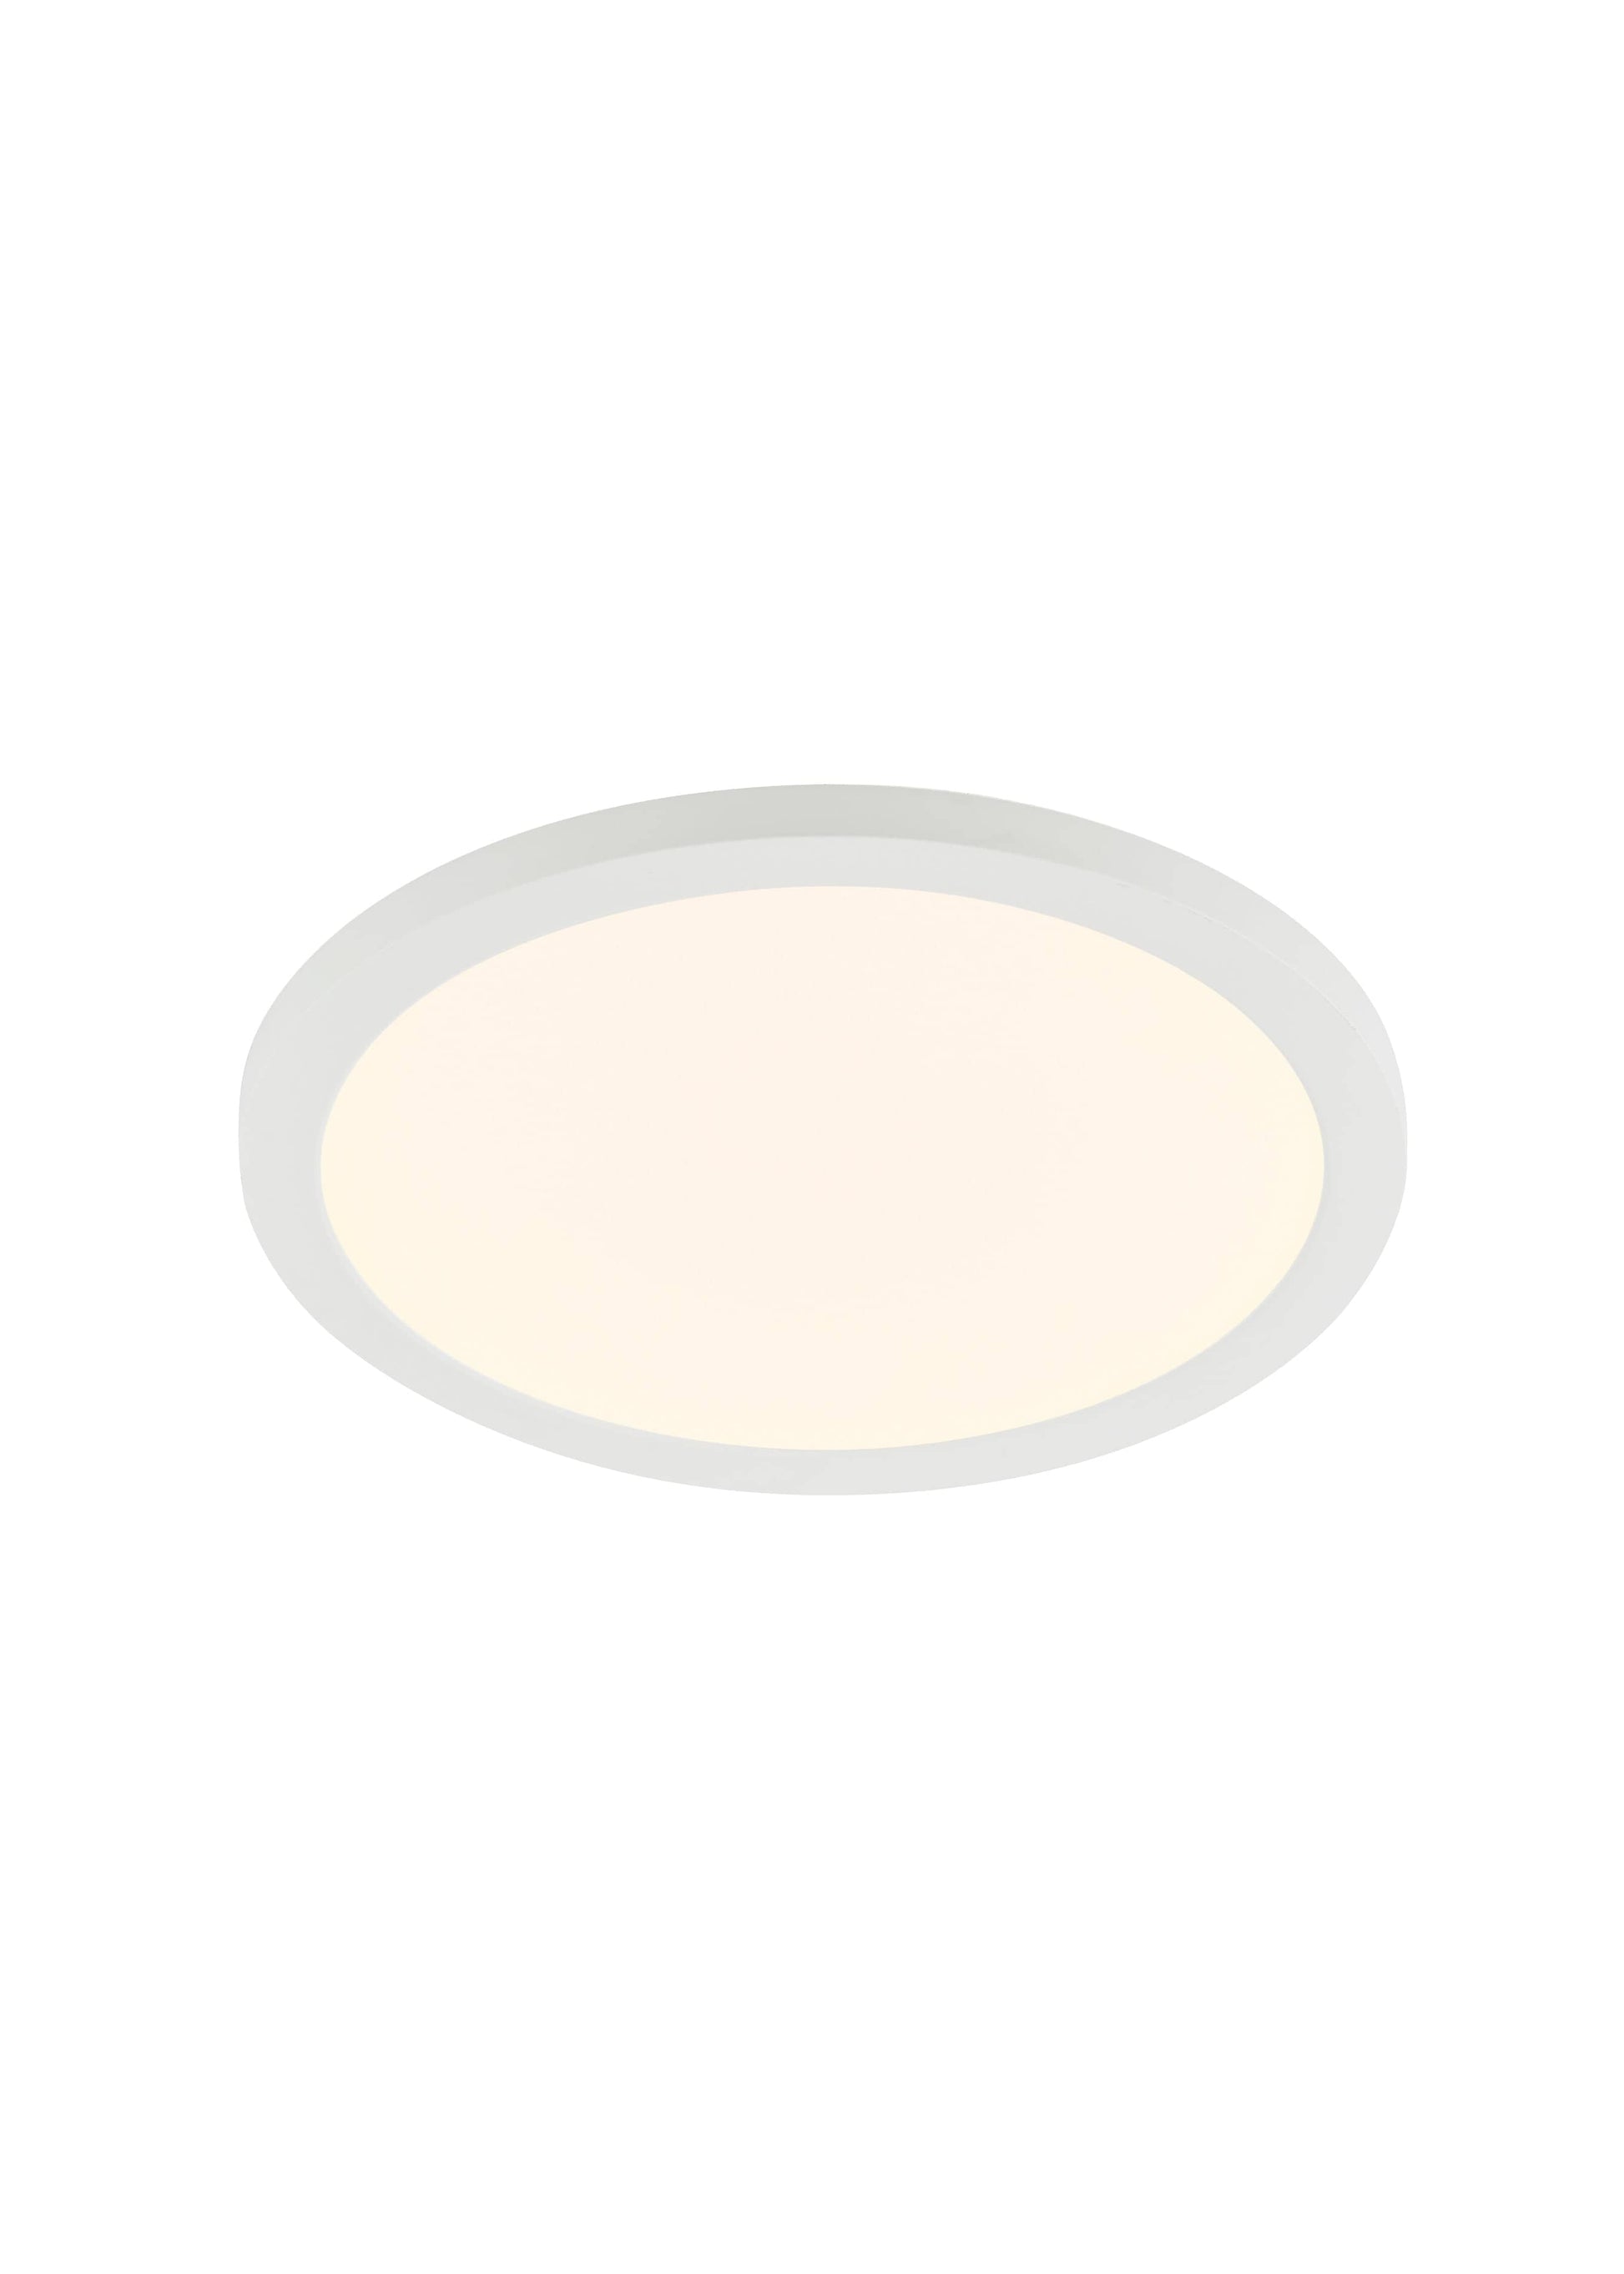 Lights  -  Le Harve White 24w LED Flush Bathroom Light  -  50155600